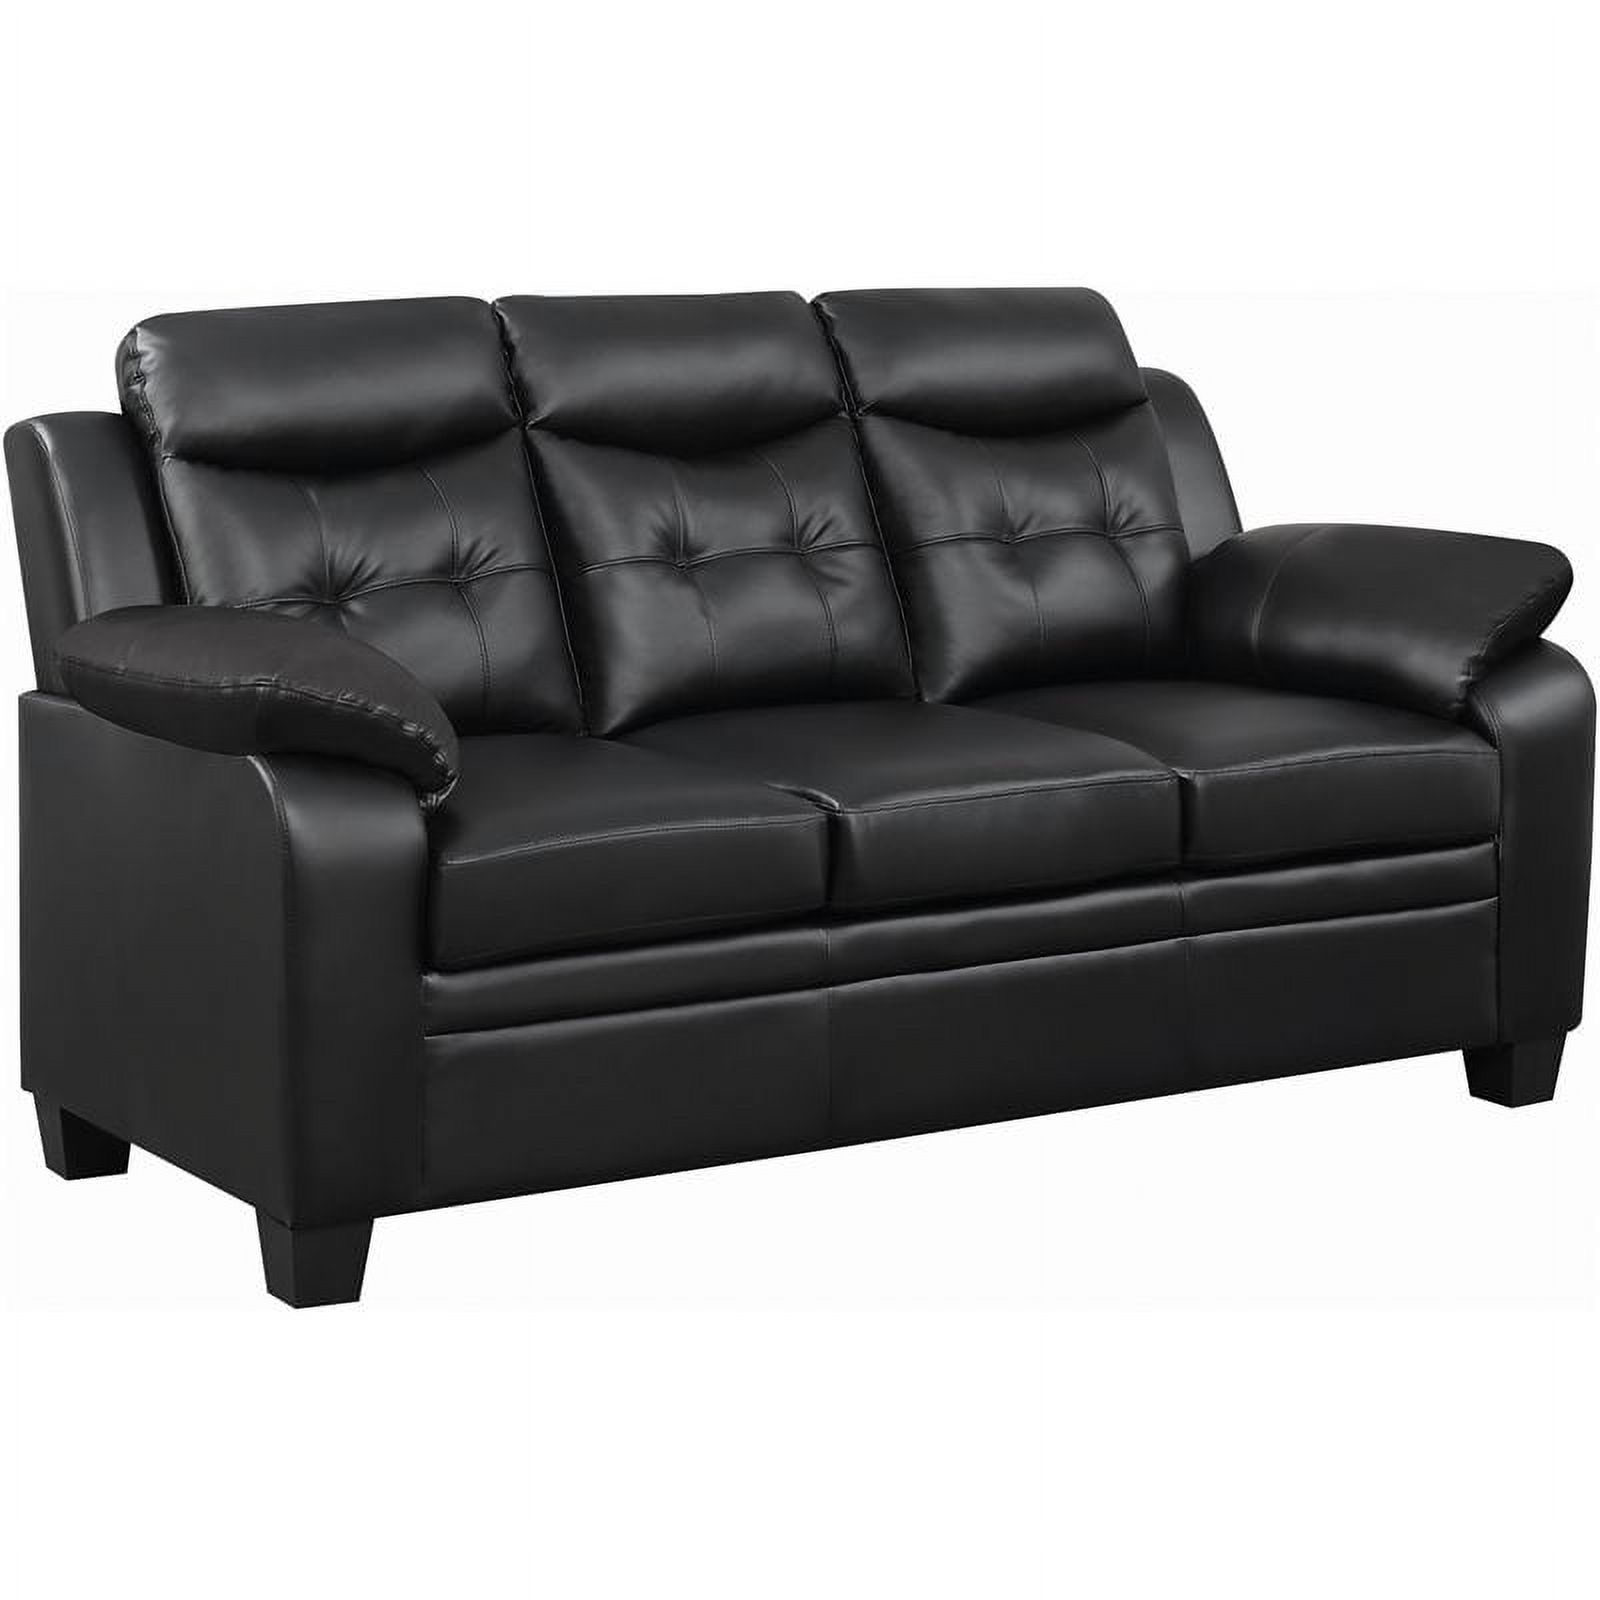 Finley Tufted Upholstered Sofa Black - image 2 of 3